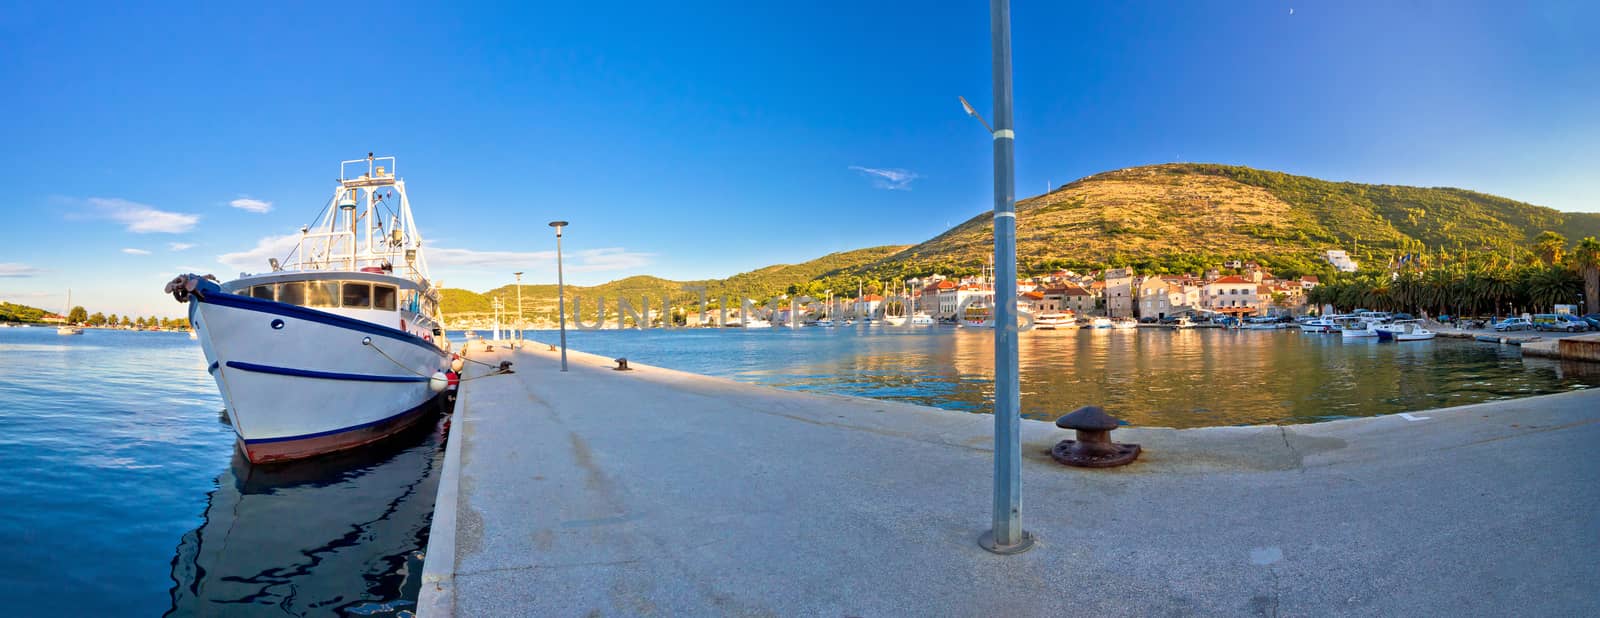 Town of Vis panoramic harbor view, Dalmatia archipelago of Croatia